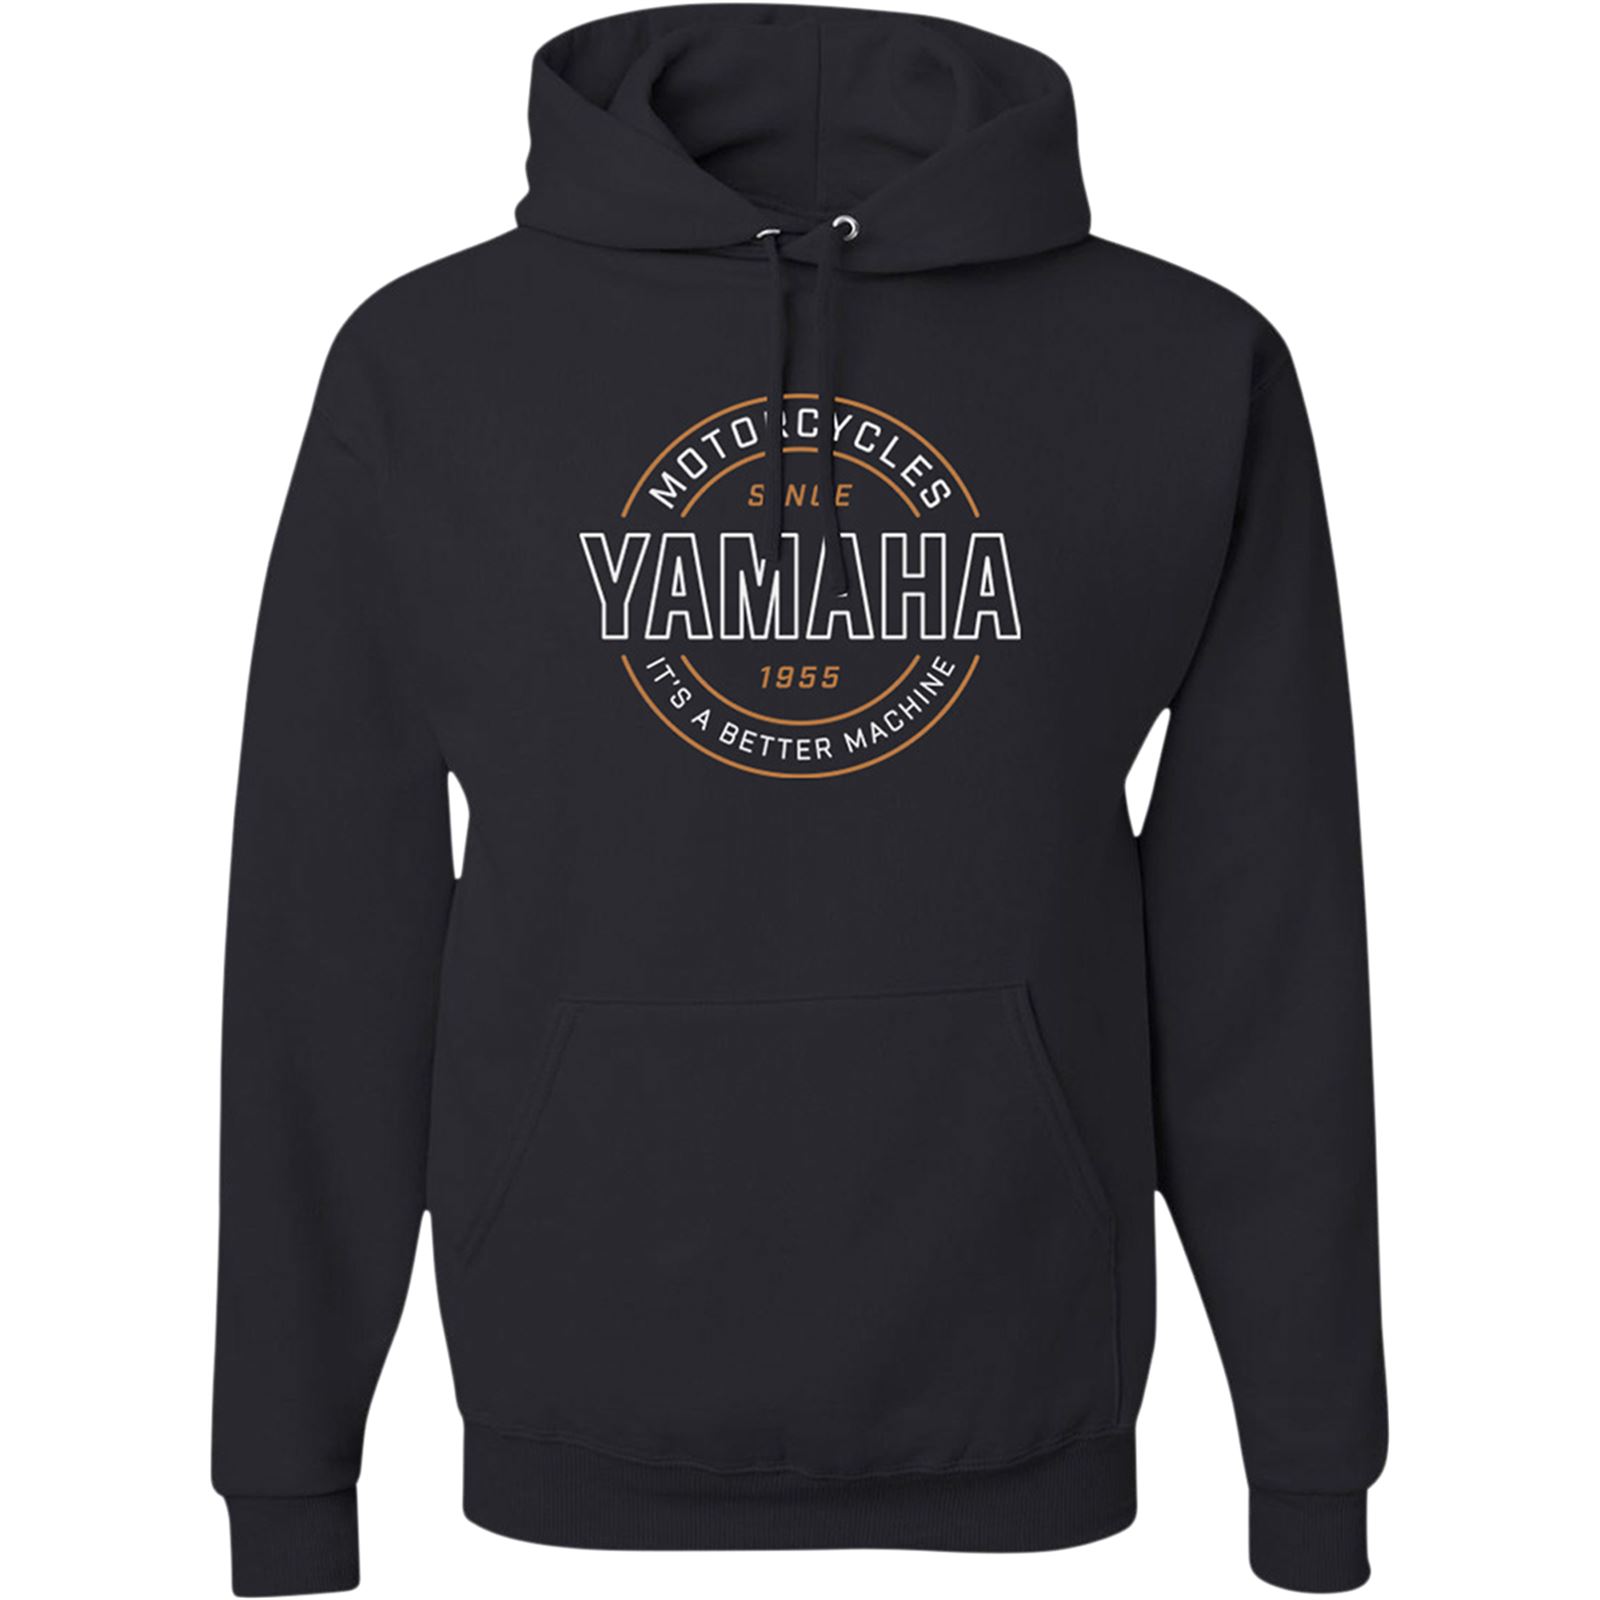 Yamaha Better Machine Hoodie - Black - Large